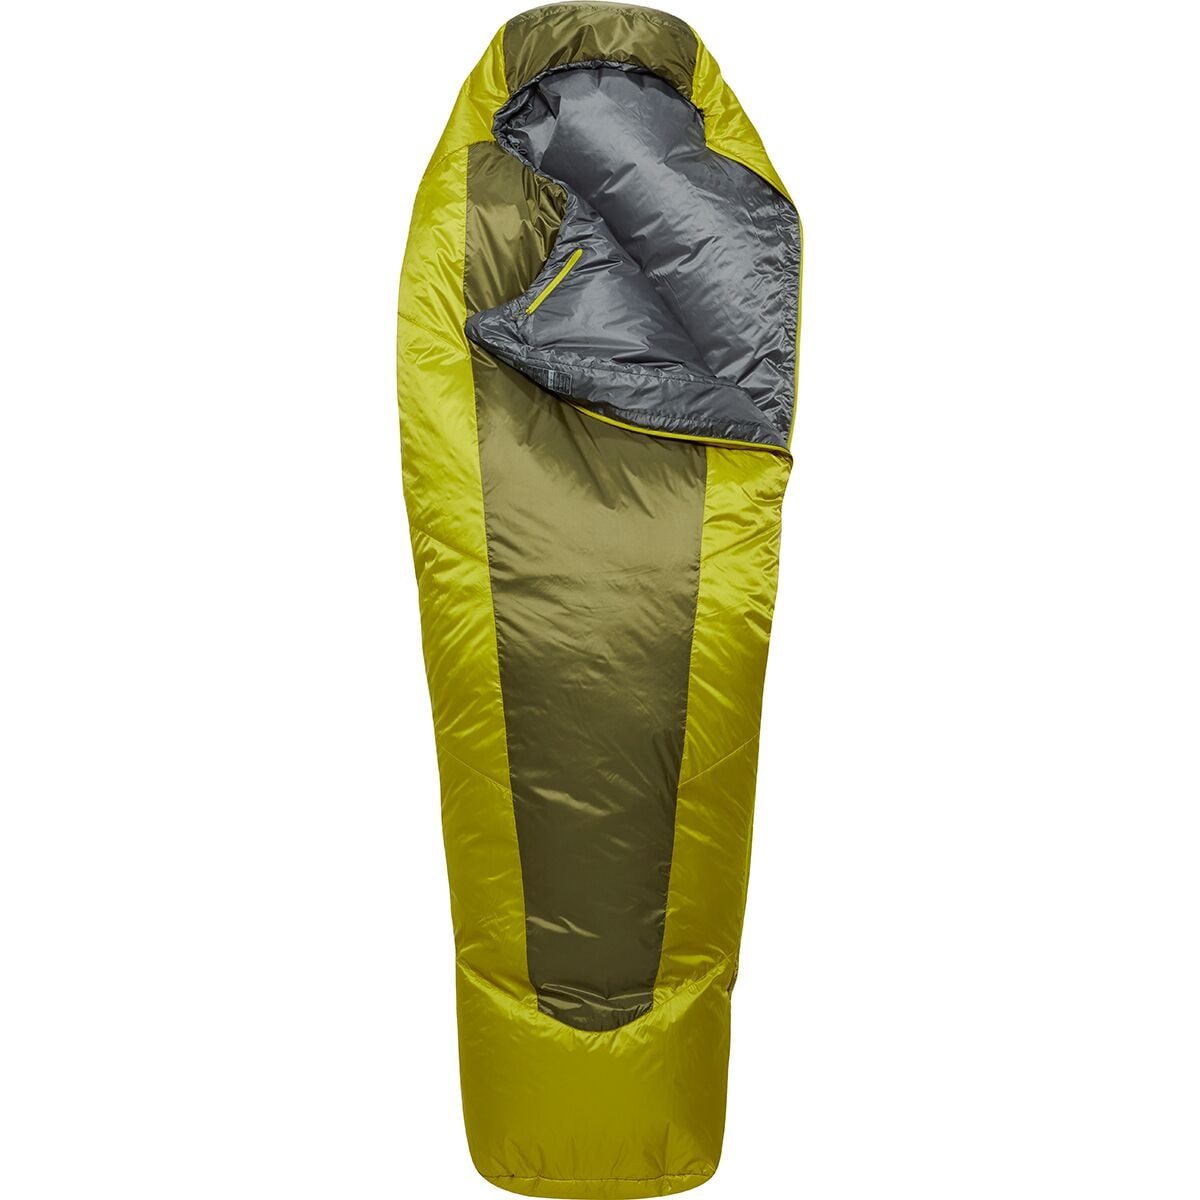 Solar Eco 0 Sleeping Bag: 40F Synthetic